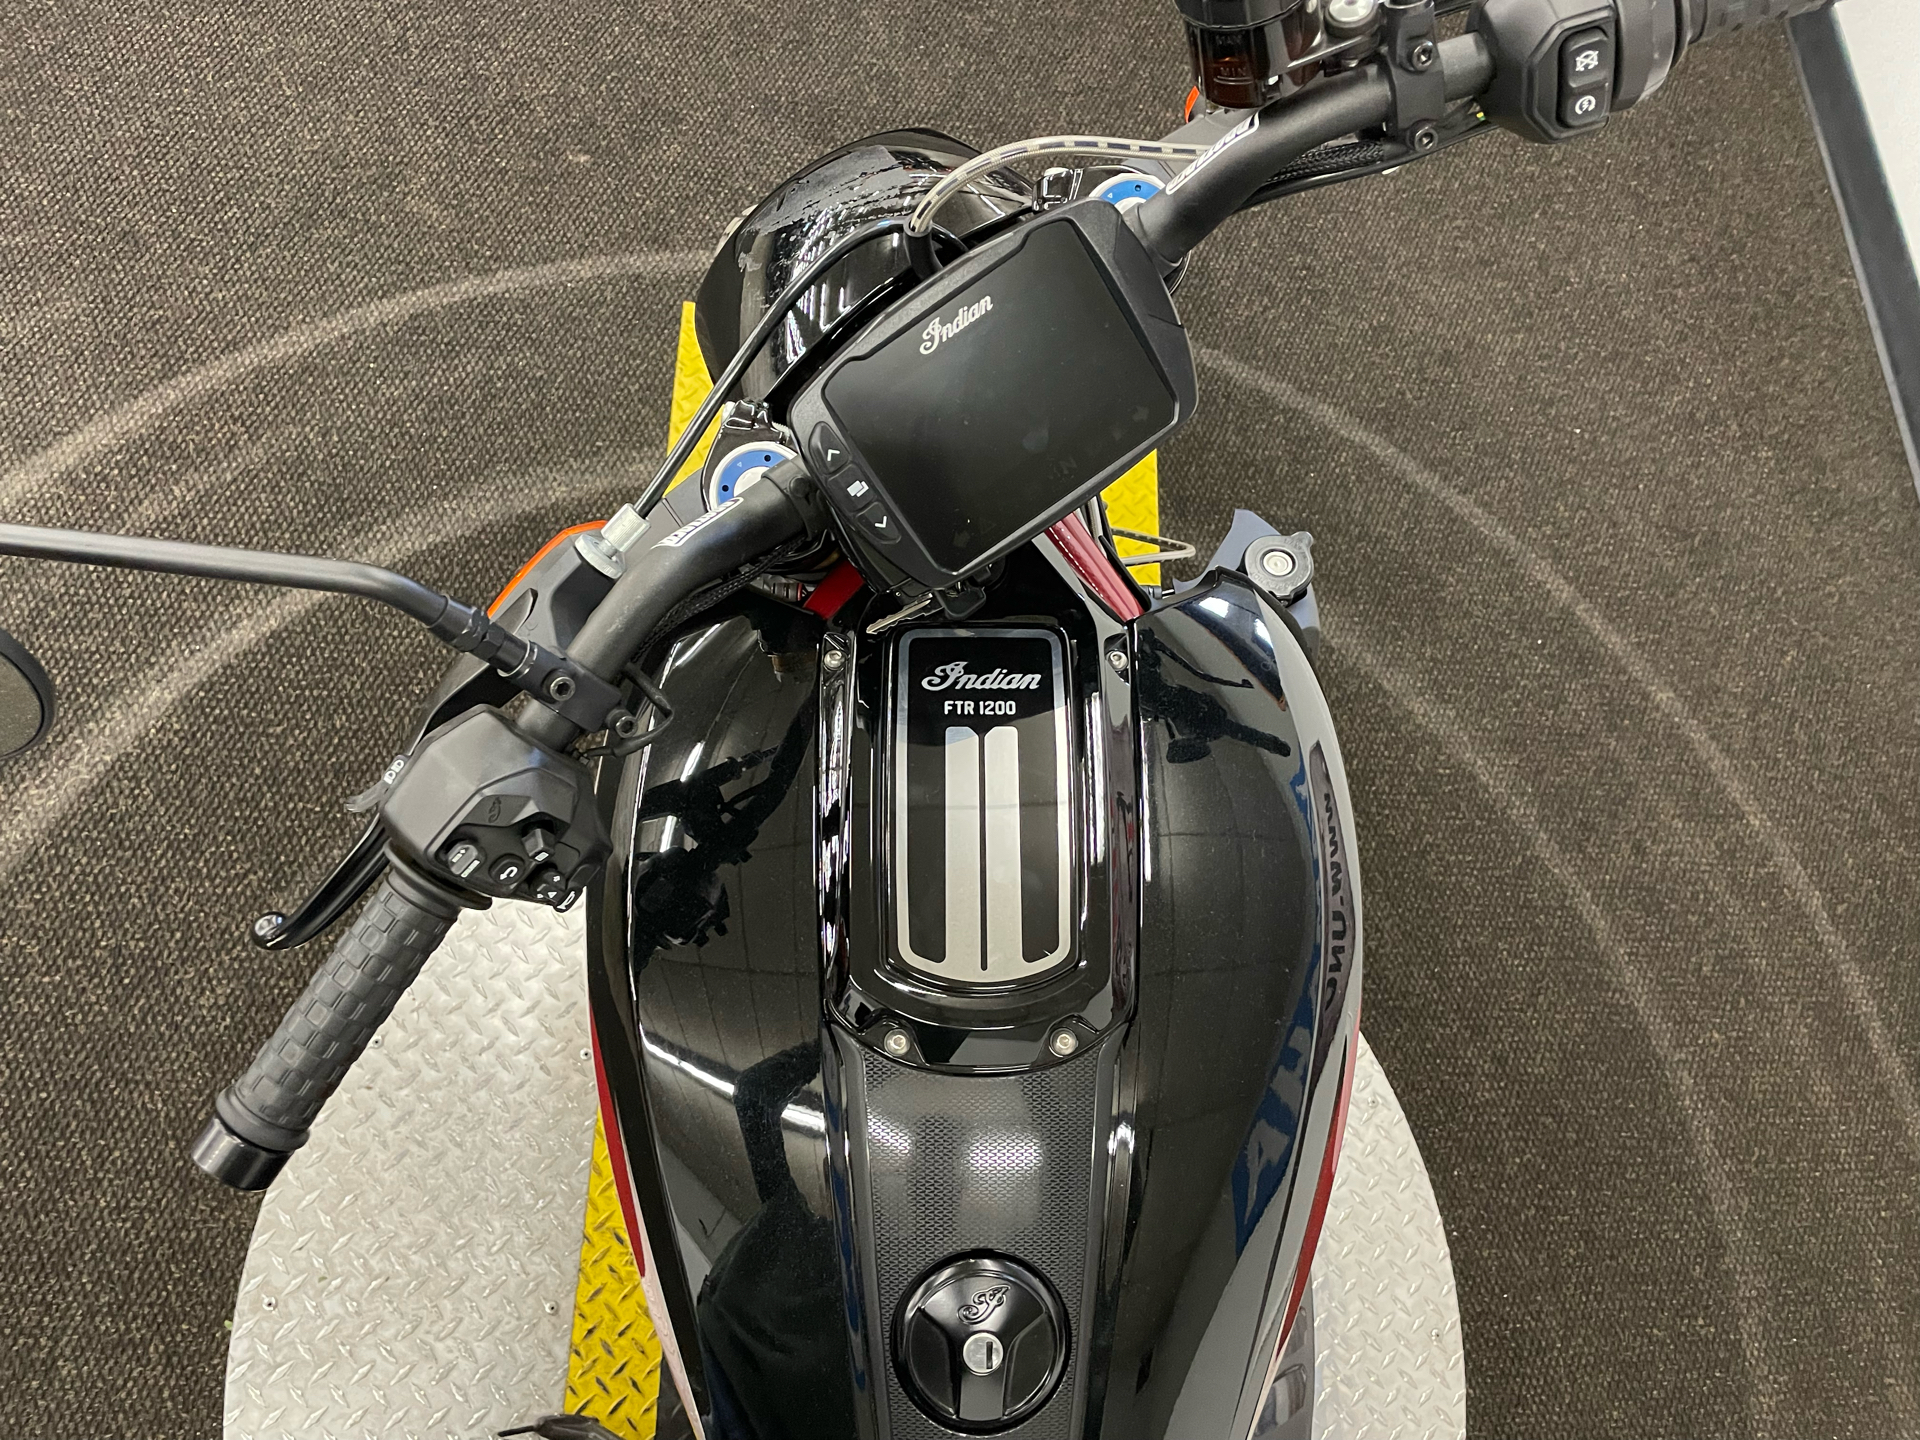 2019 Indian Motorcycle FTR™ 1200 S in Tyrone, Pennsylvania - Photo 4